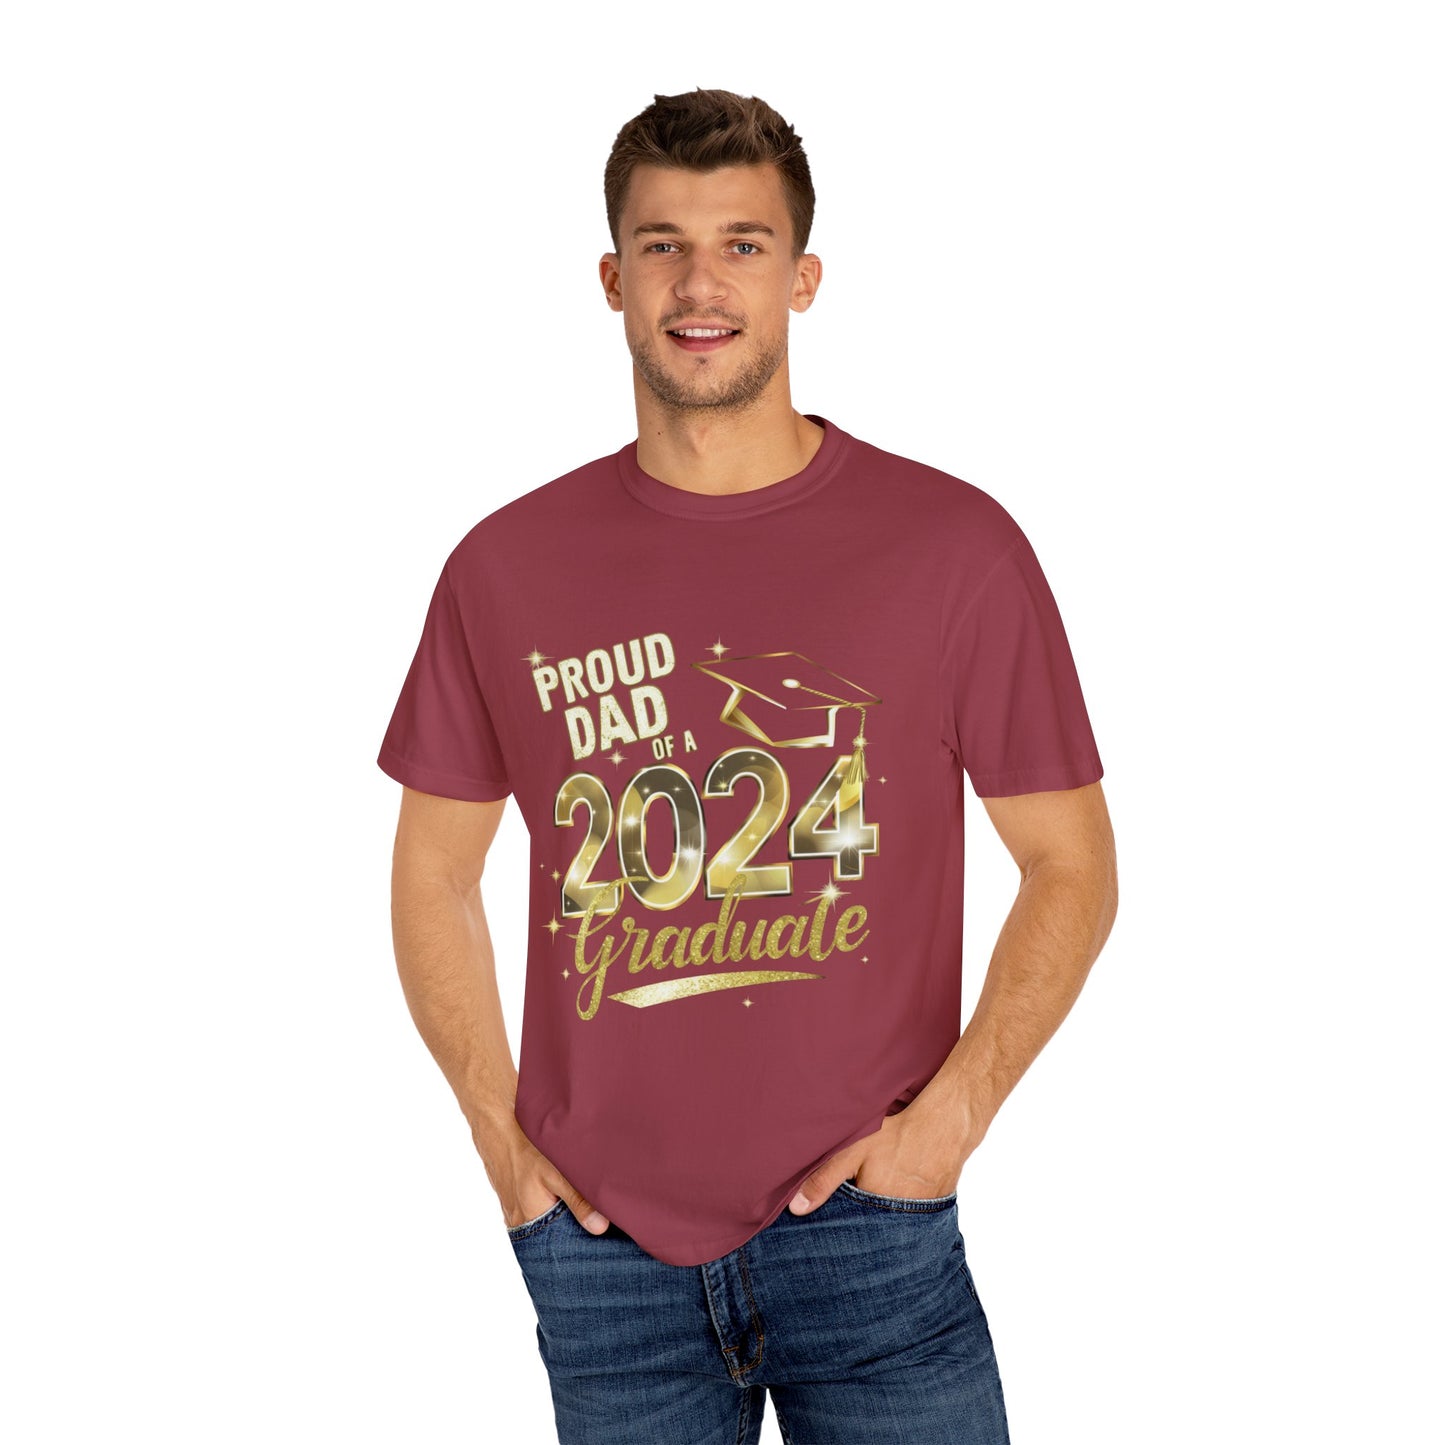 Proud of Dad 2024 Graduate Unisex Garment-dyed T-shirt Cotton Funny Humorous Graphic Soft Premium Unisex Men Women Chili T-shirt Birthday Gift-36